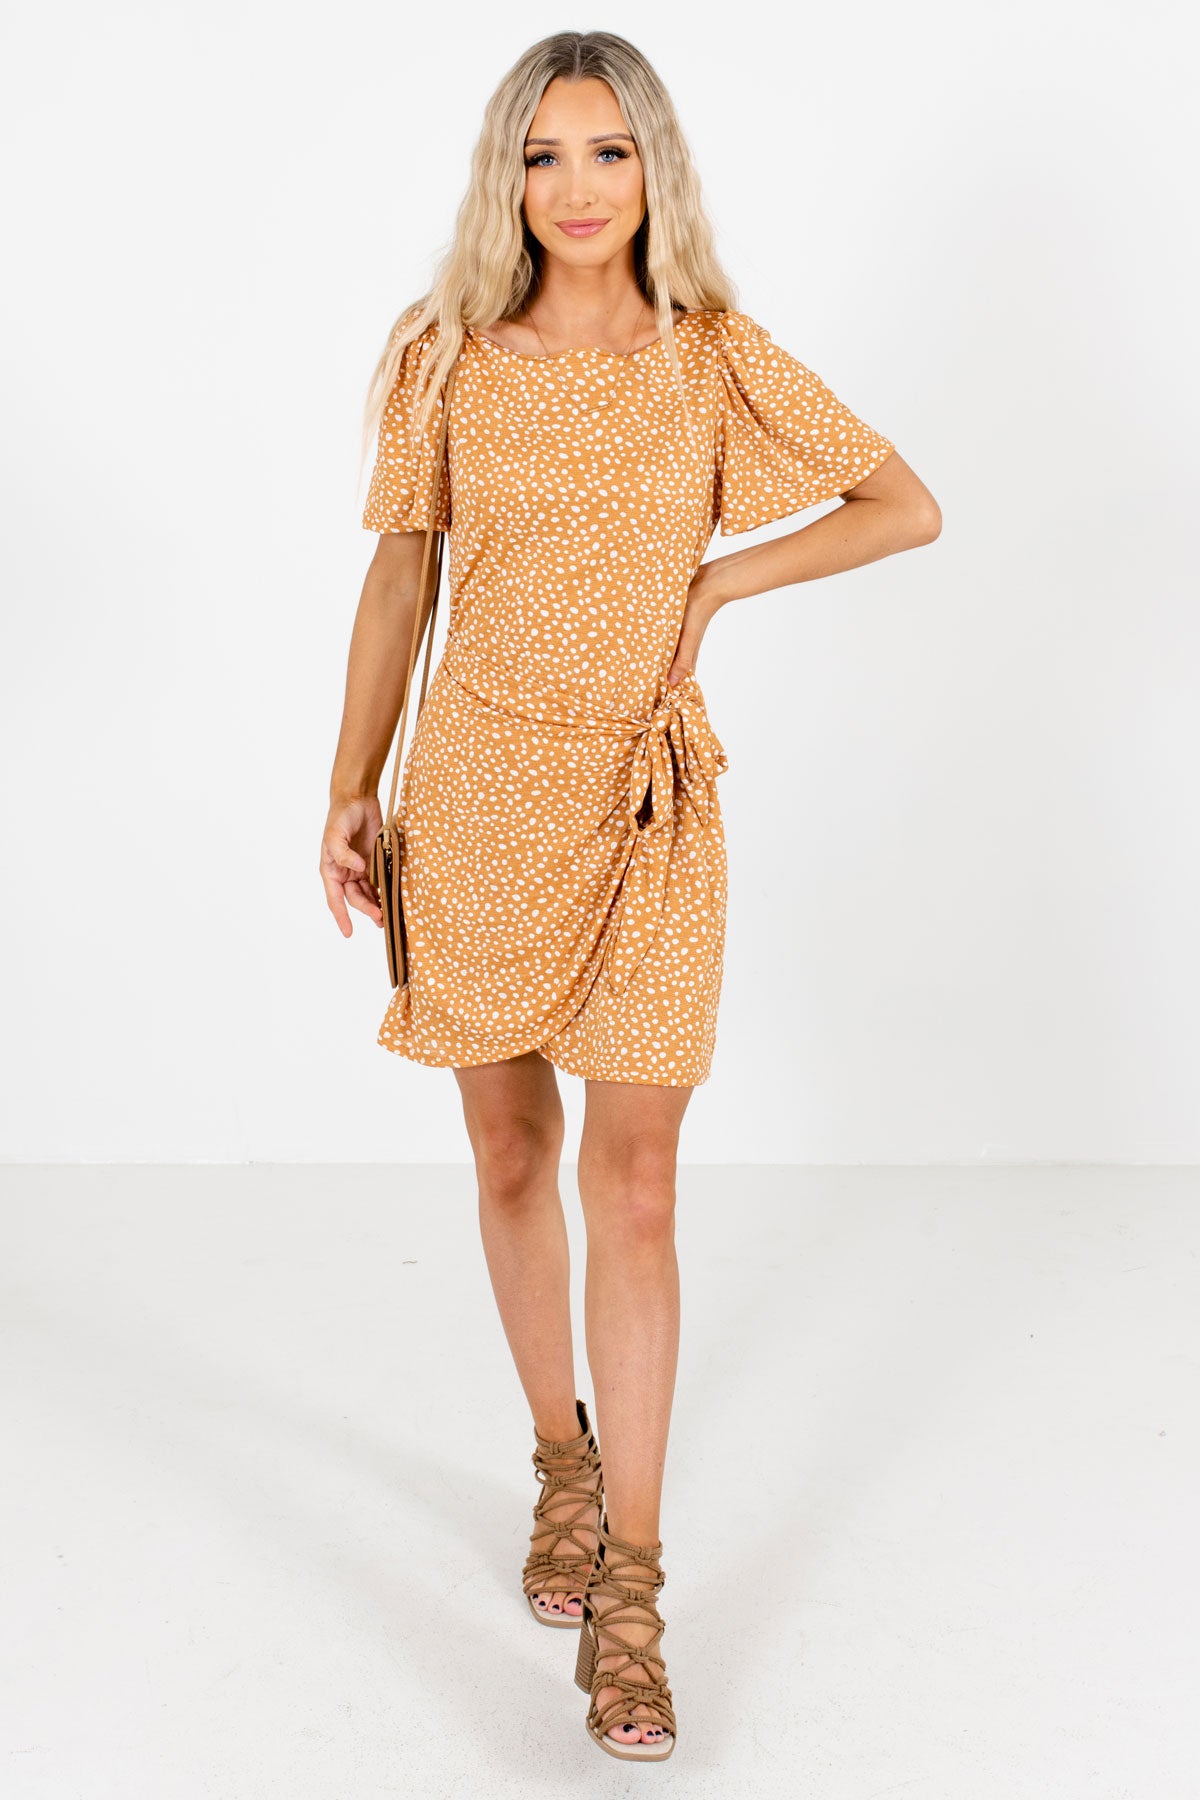 Women's Orange High-Quality Stretchy Material Boutique Mini Dress